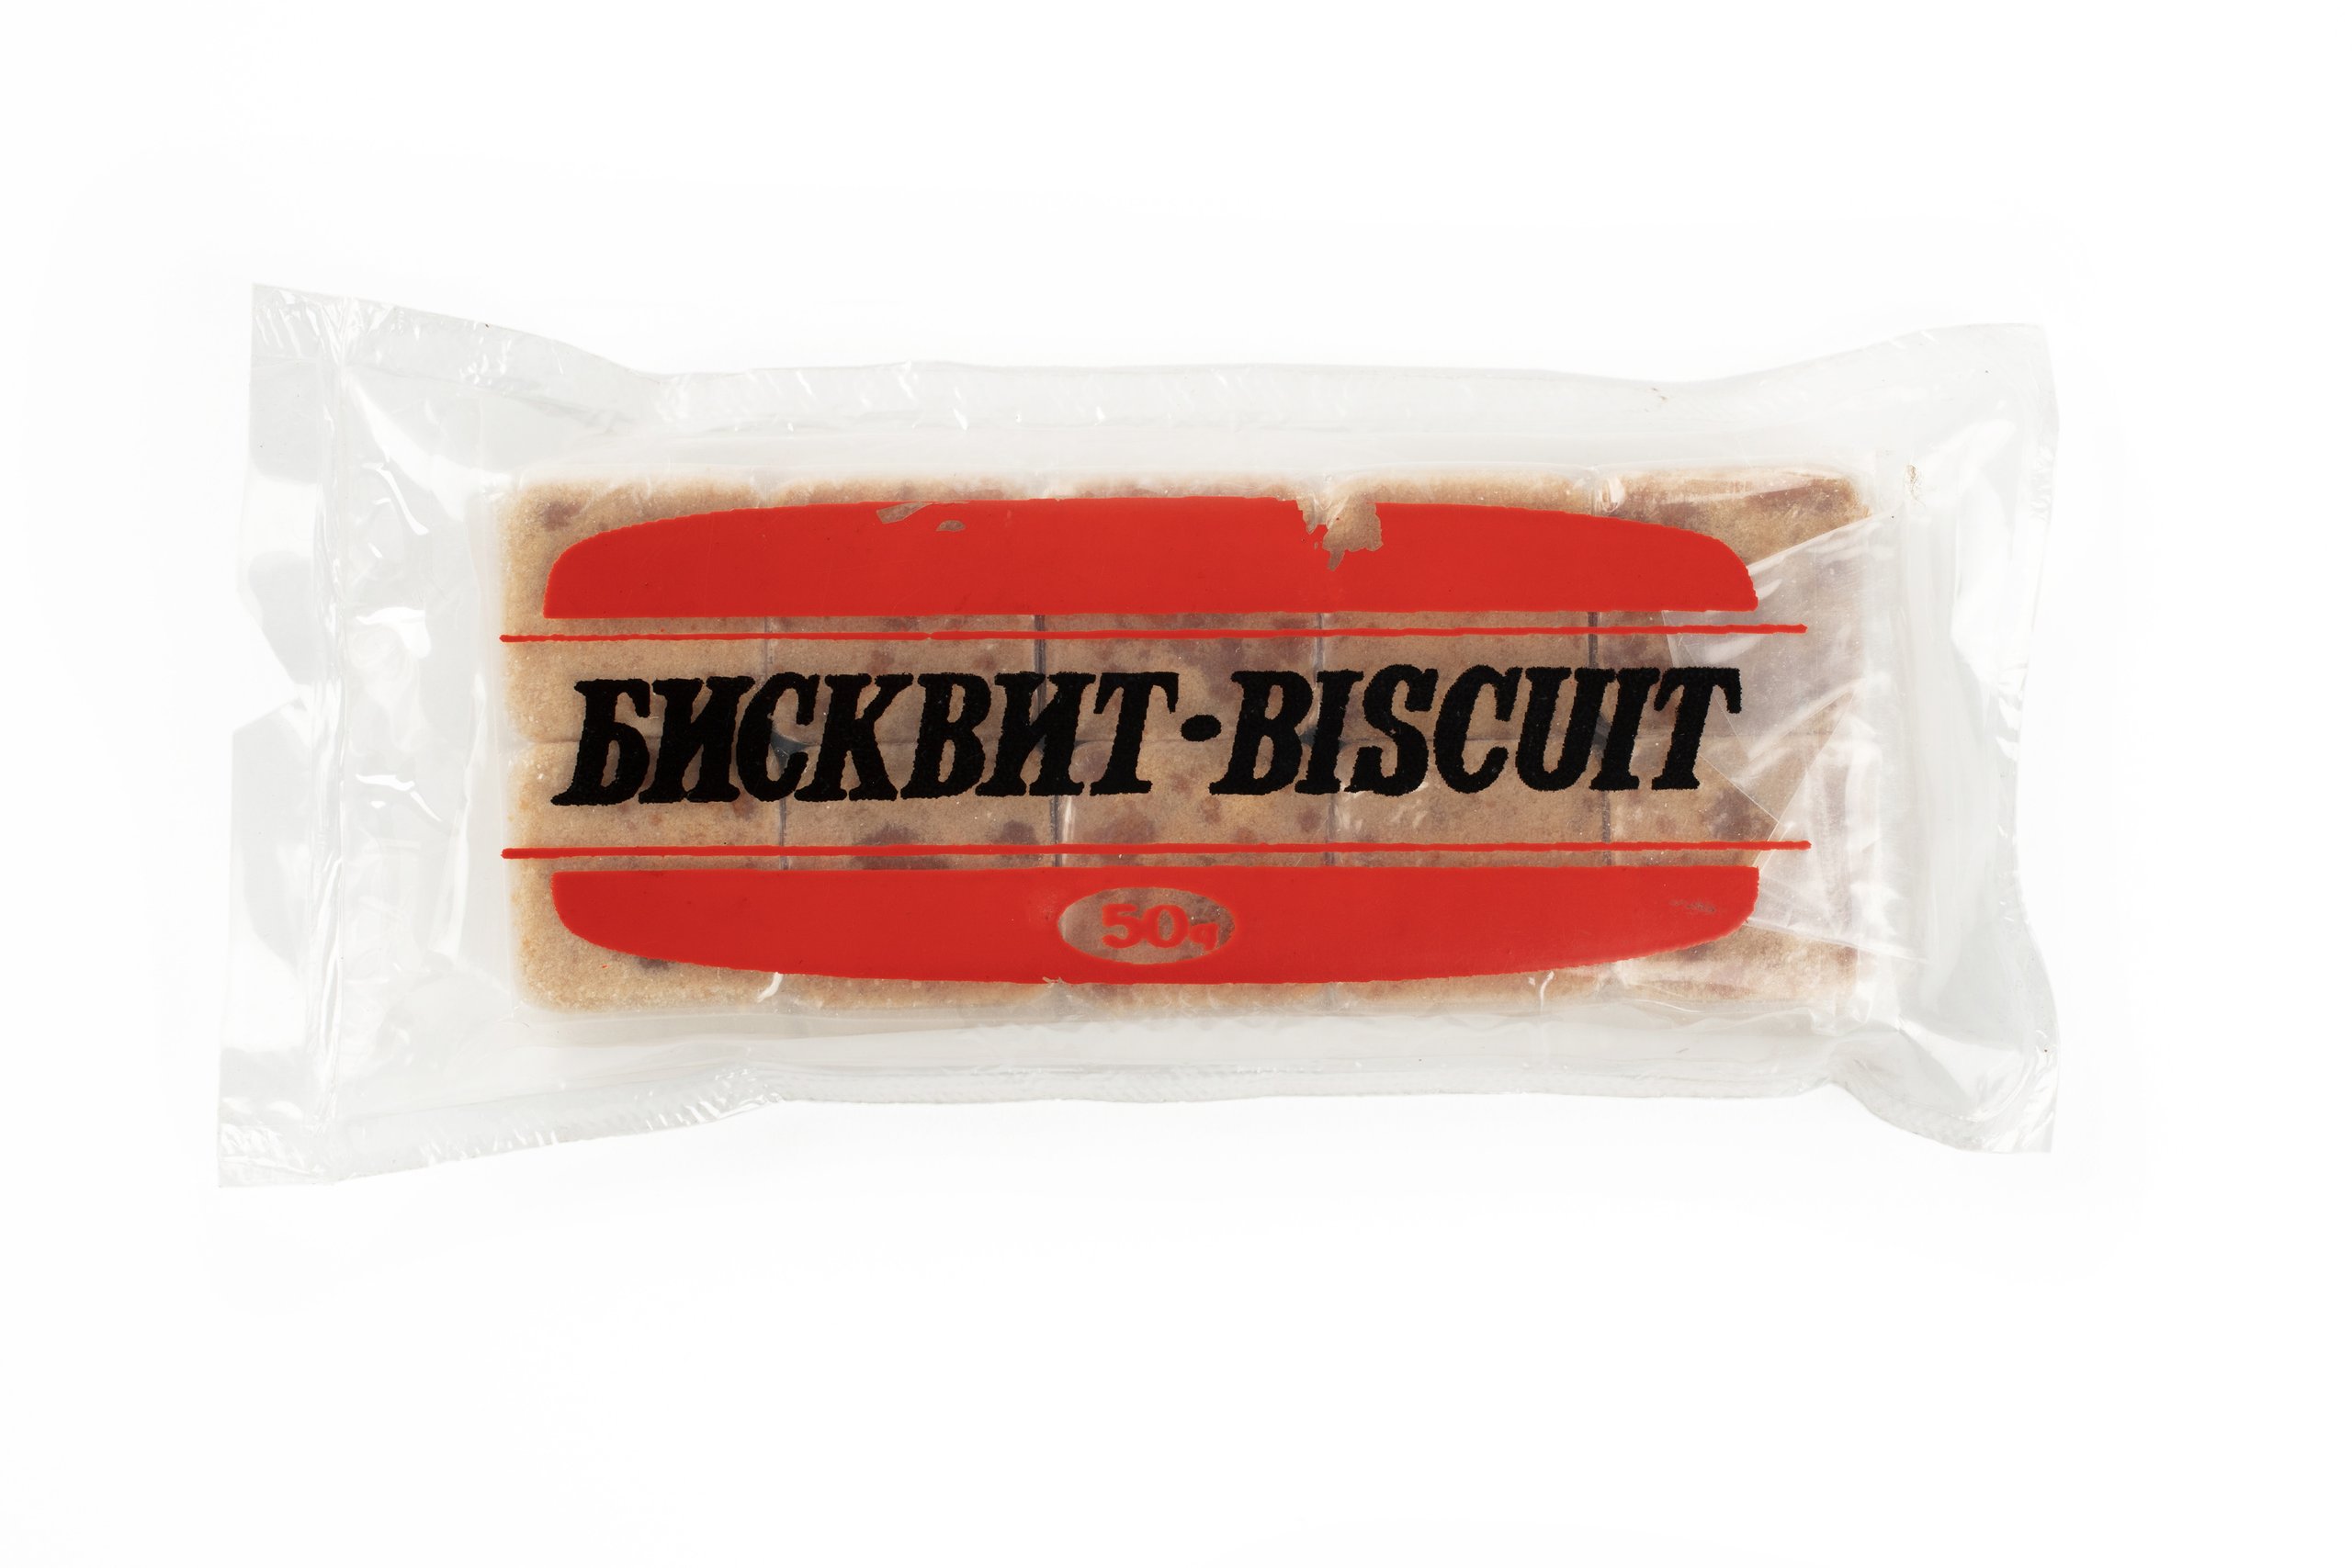 Space food package of biscuit